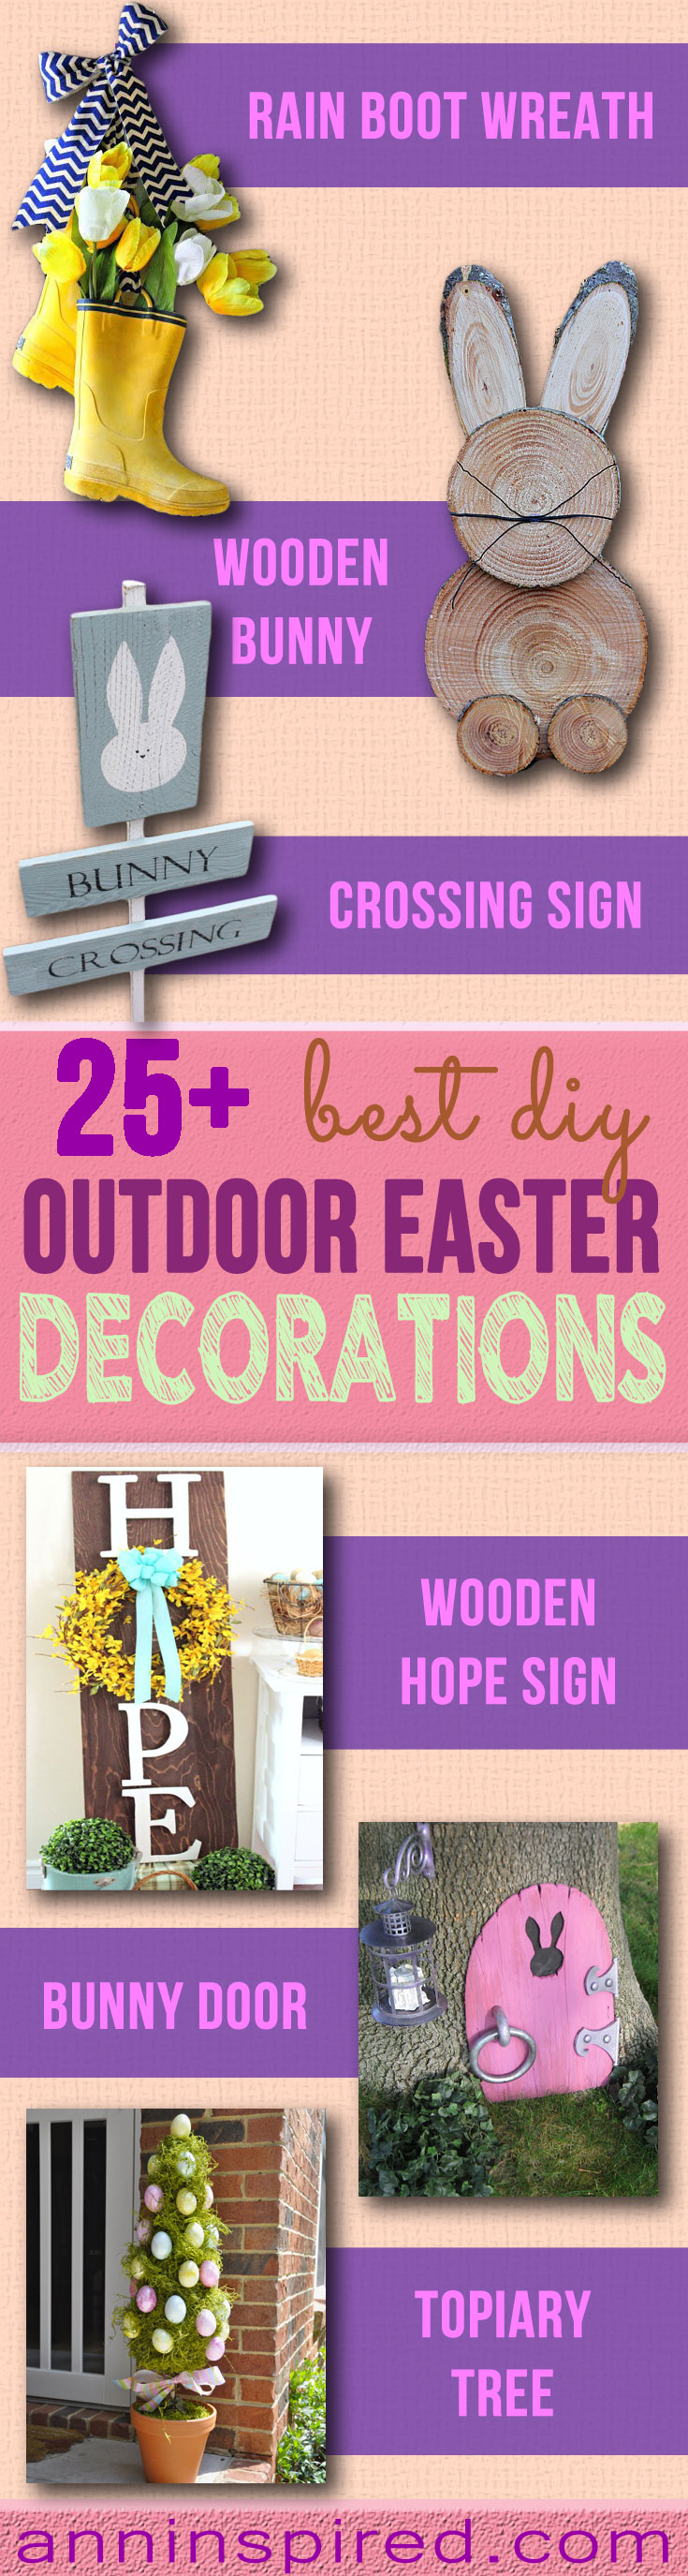 25 Best Diy Outdoor Easter Decorations